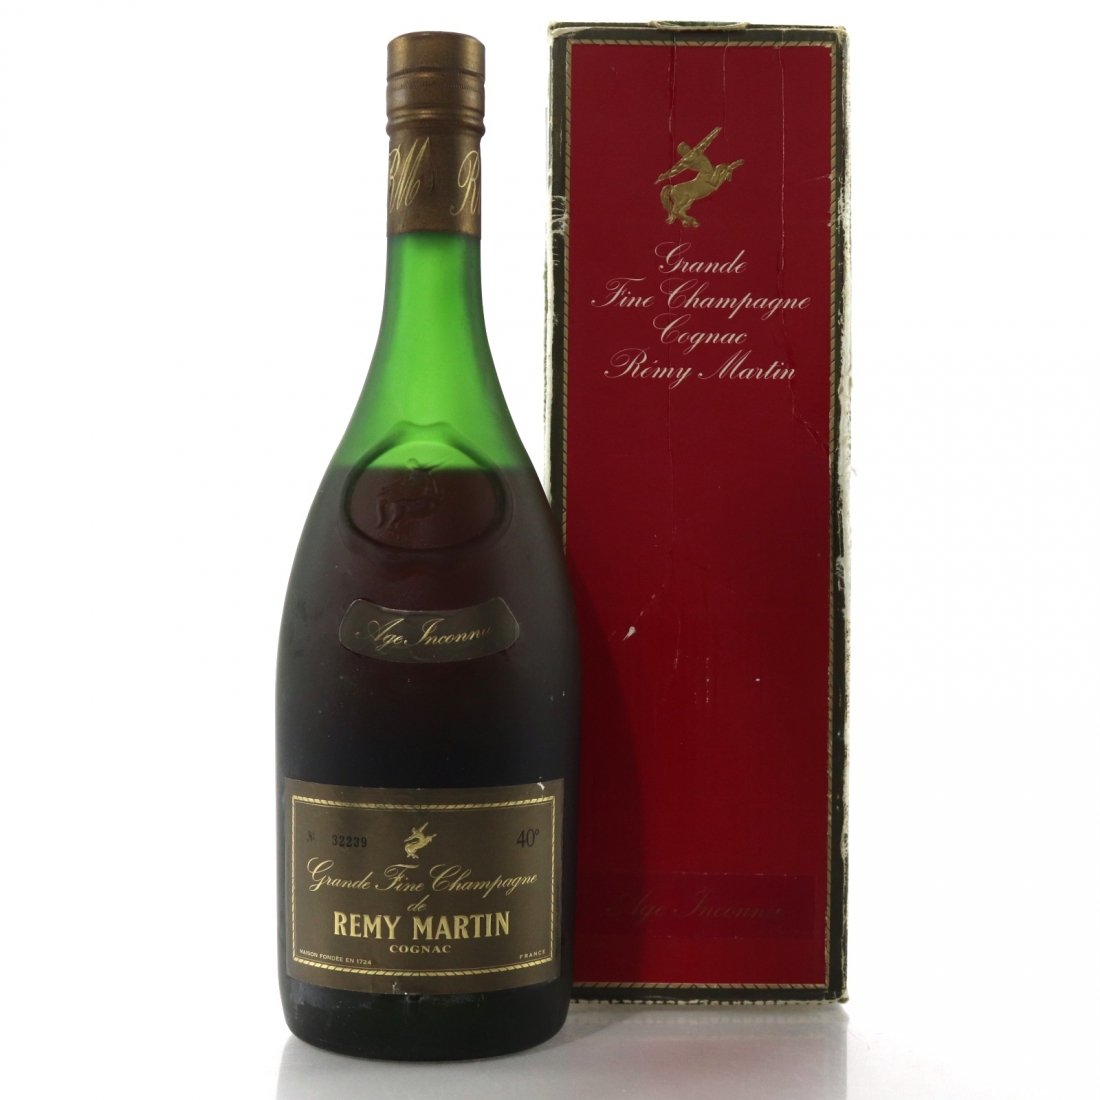 Remy Martin Age Inconnu Grande Fine Champagne Cognac 1970s / German ...